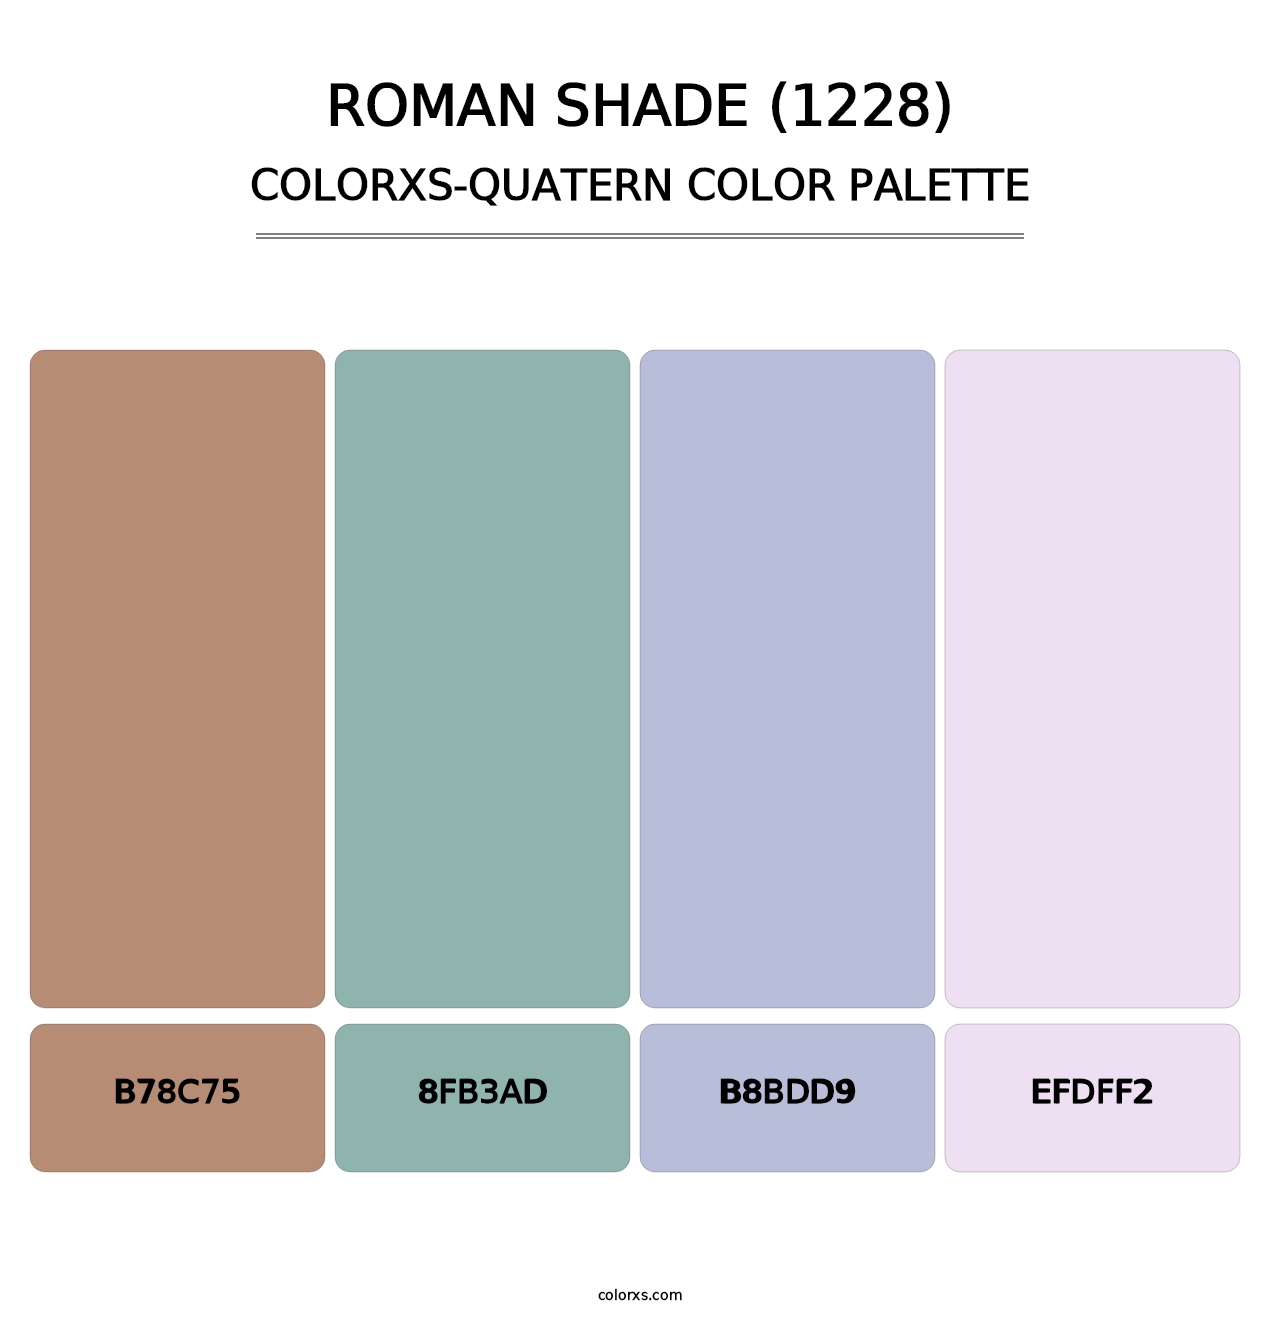 Roman Shade (1228) - Colorxs Quatern Palette